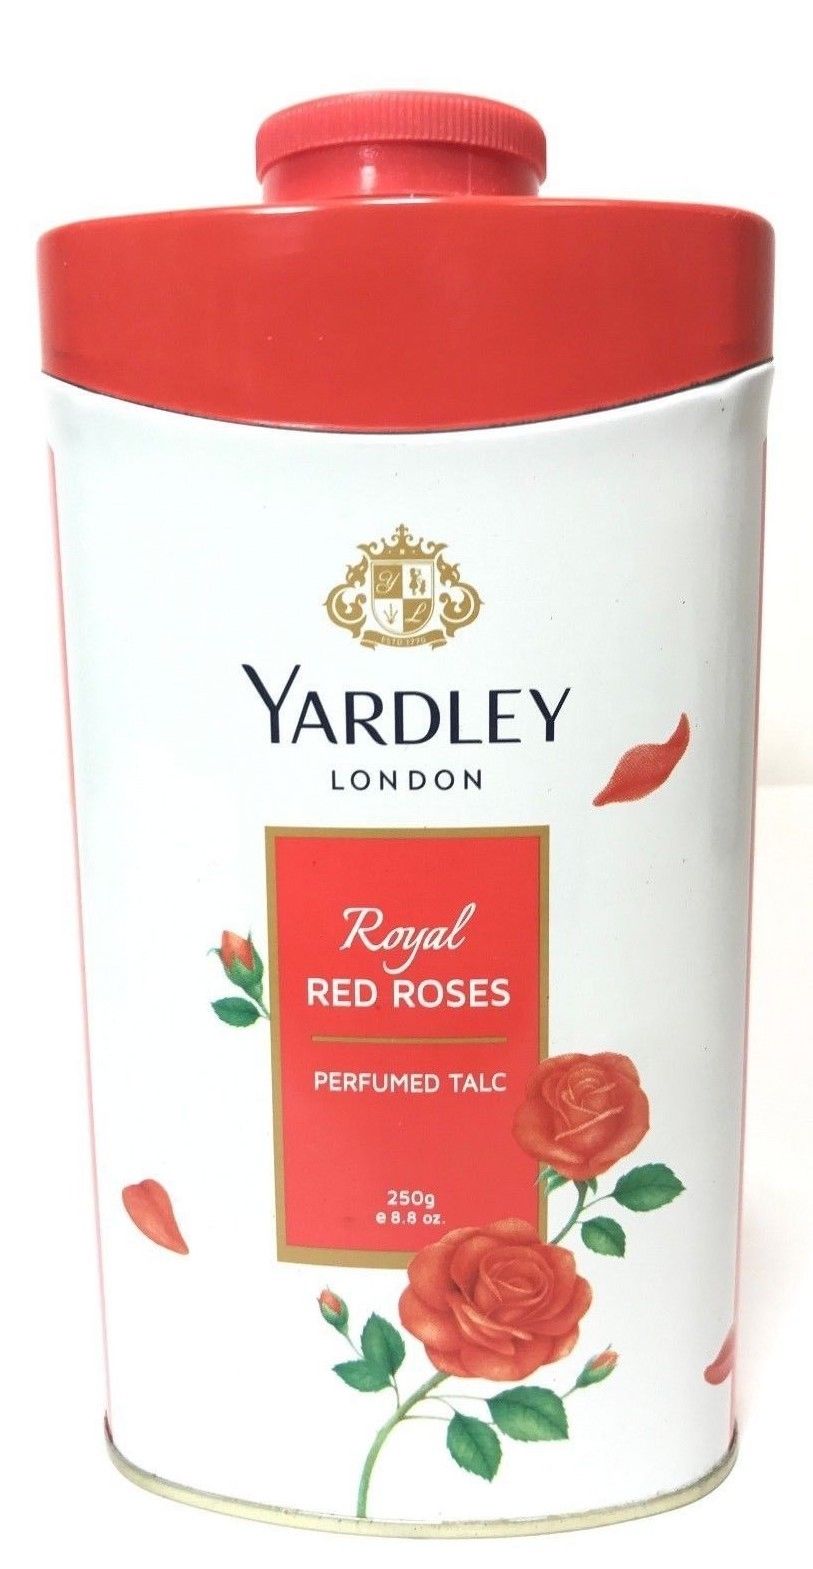 Yardley London Perfumed Talc Royal Red Roses Talcum Powder 8.8 Oz (250 G)